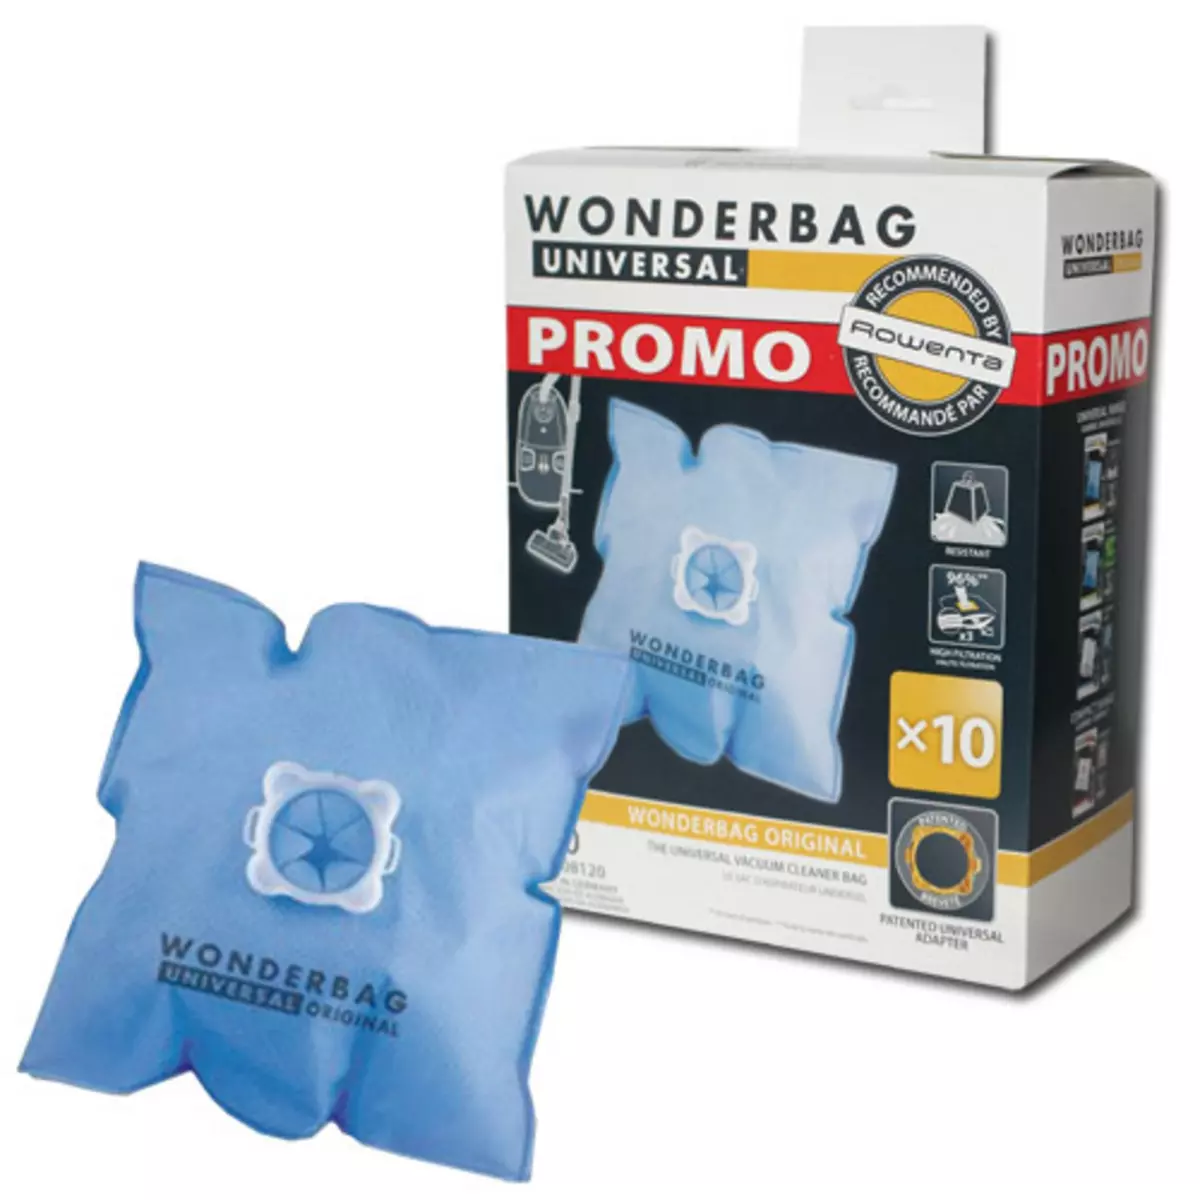 Comment installer et retirer un sac Wonderbag. 